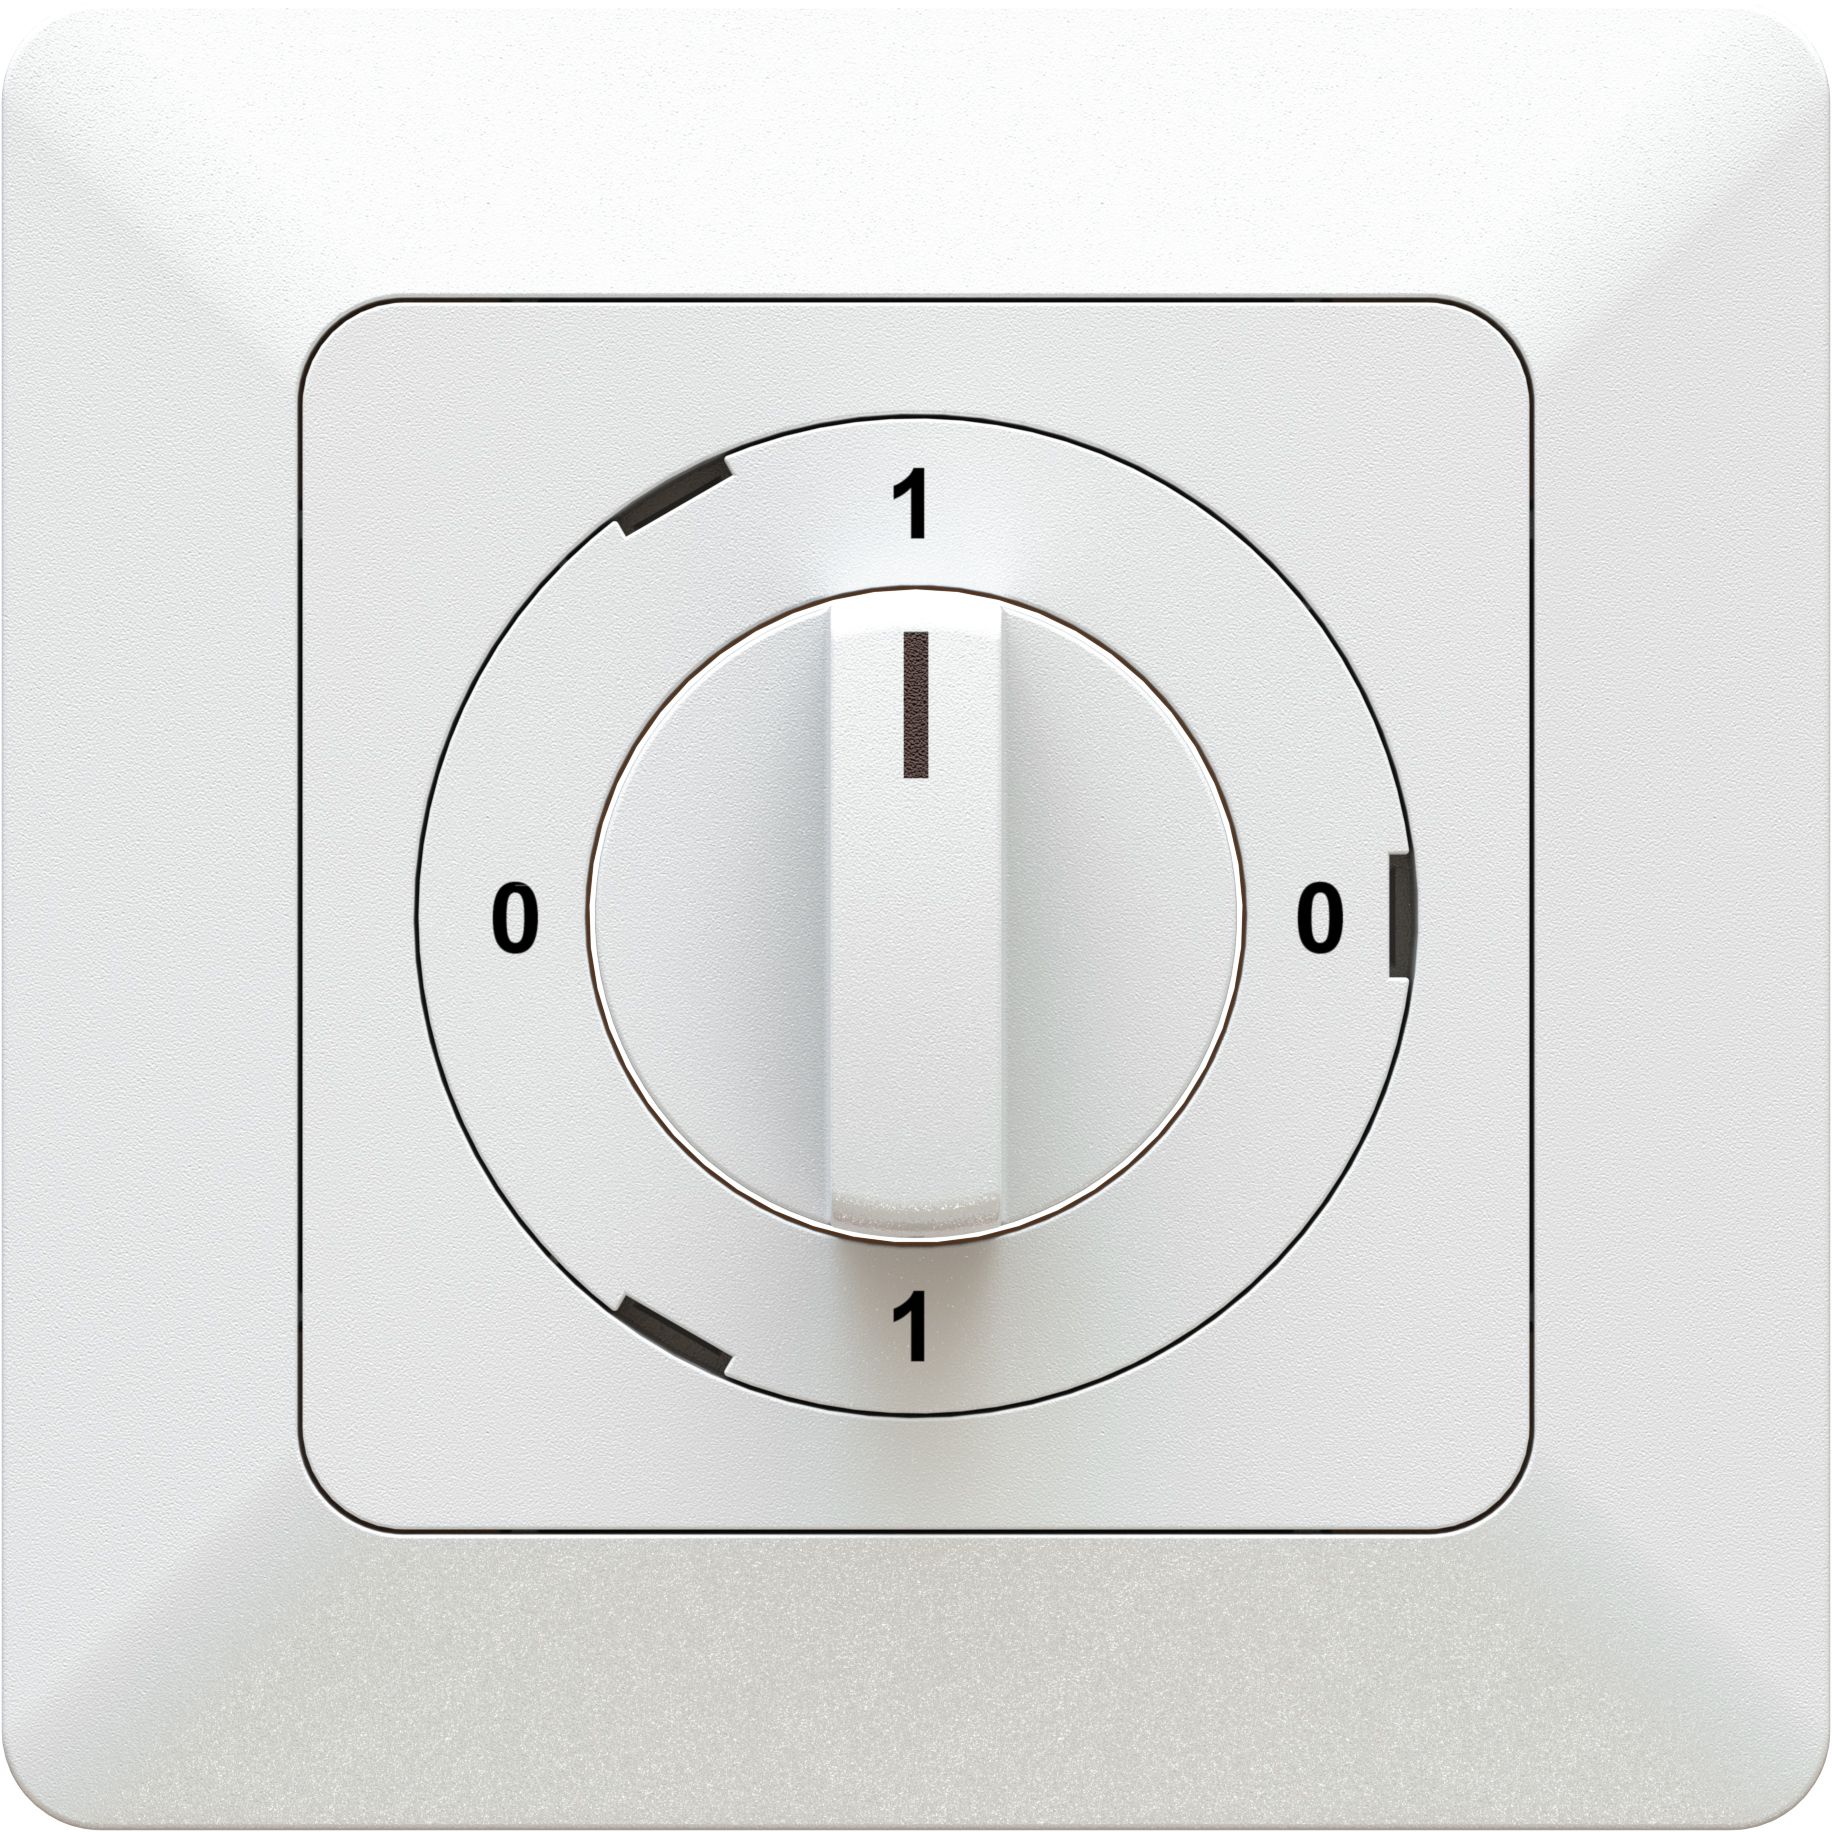 interrupteur rotatif schéma 0/1L 0-1-0-1 ENC priamos blanc